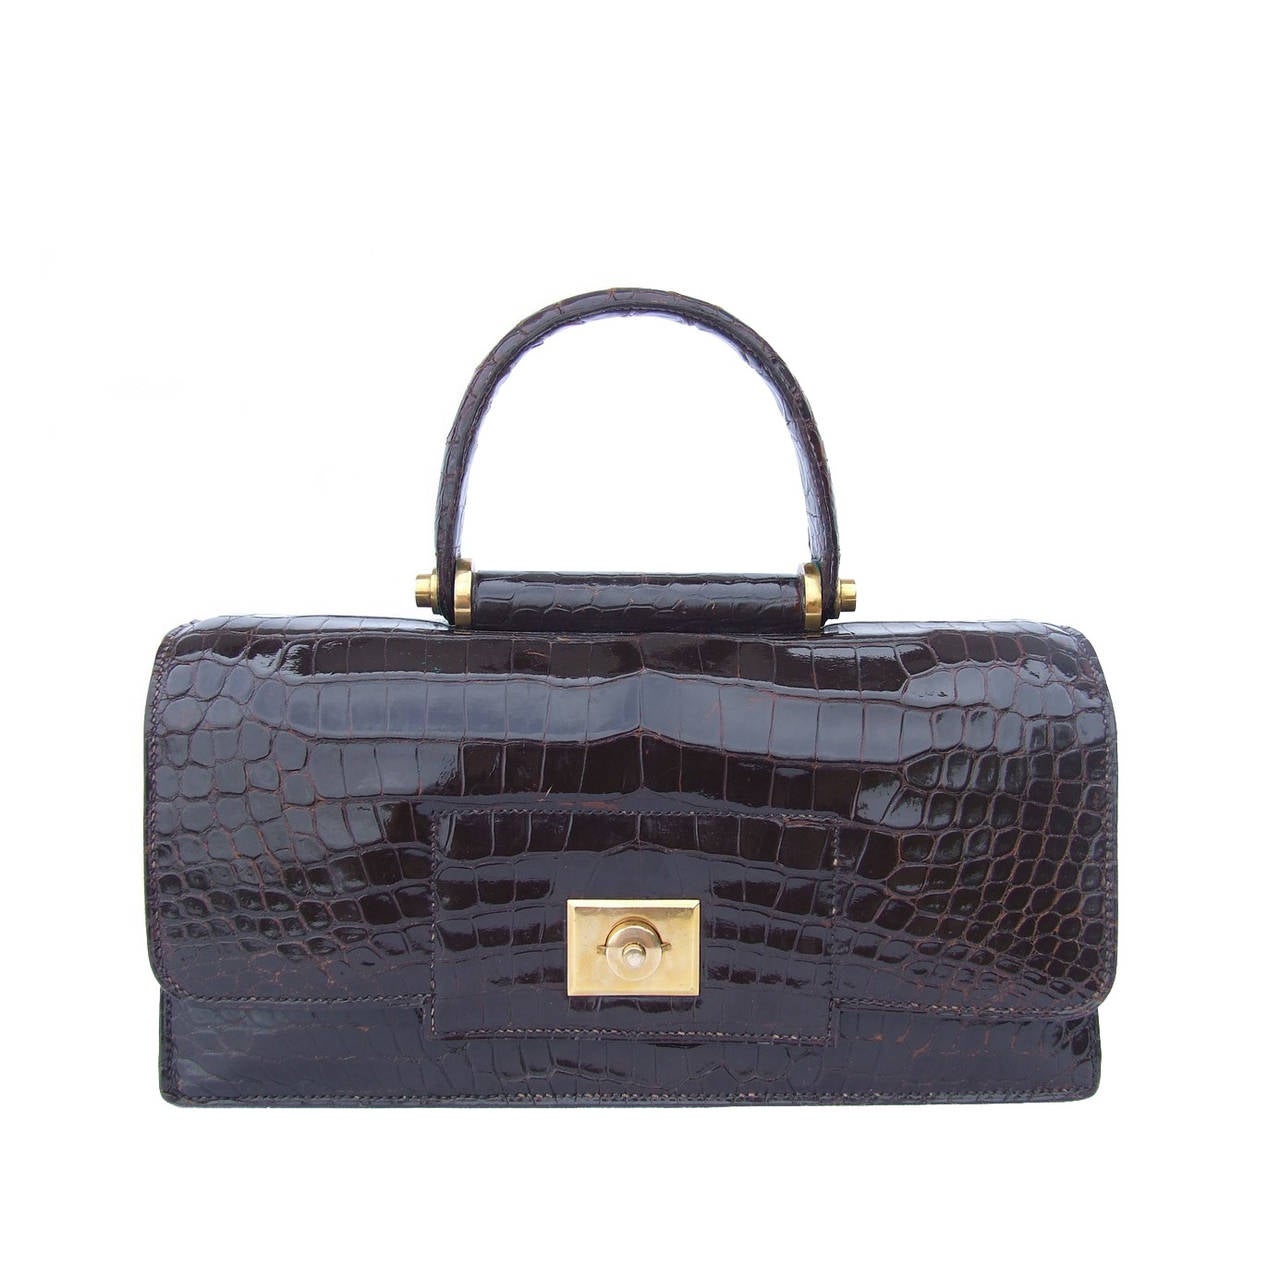 Authentic Hermes Vintage Handbag Brown Crocodile at 1stdibs